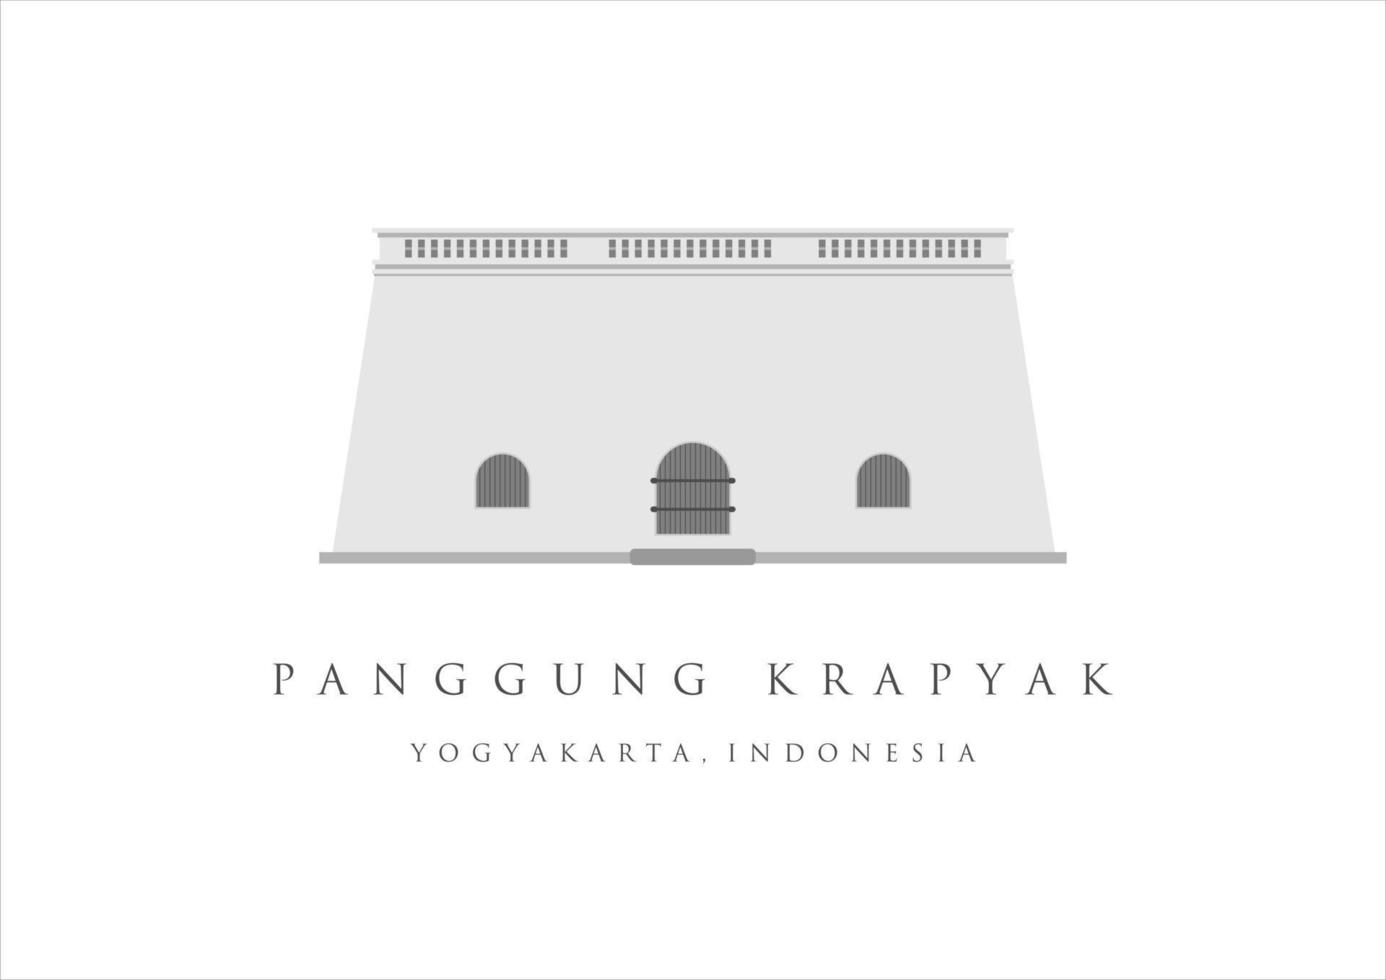 Panggung Krapyak landmark building of Yogyakarta. Heritage tourism of Indonesia. Jogjakarta old building vector illustration